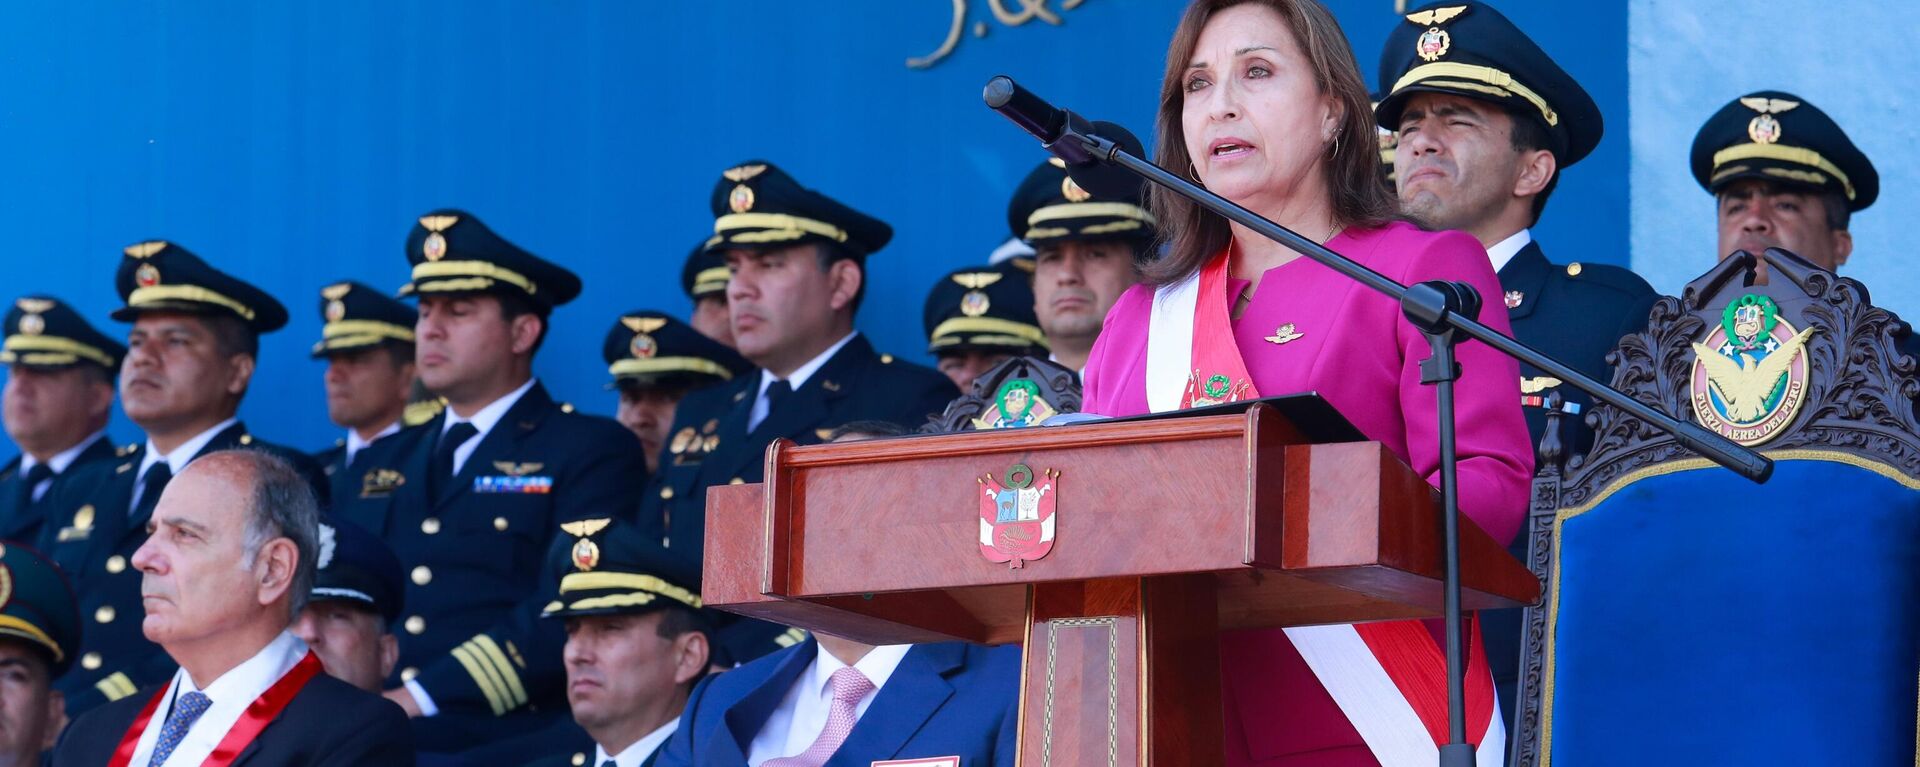 La presidenta peruana, Dina Boluarte, anuncia las últimas decisiones del gobierno - Sputnik Mundo, 1920, 21.12.2022